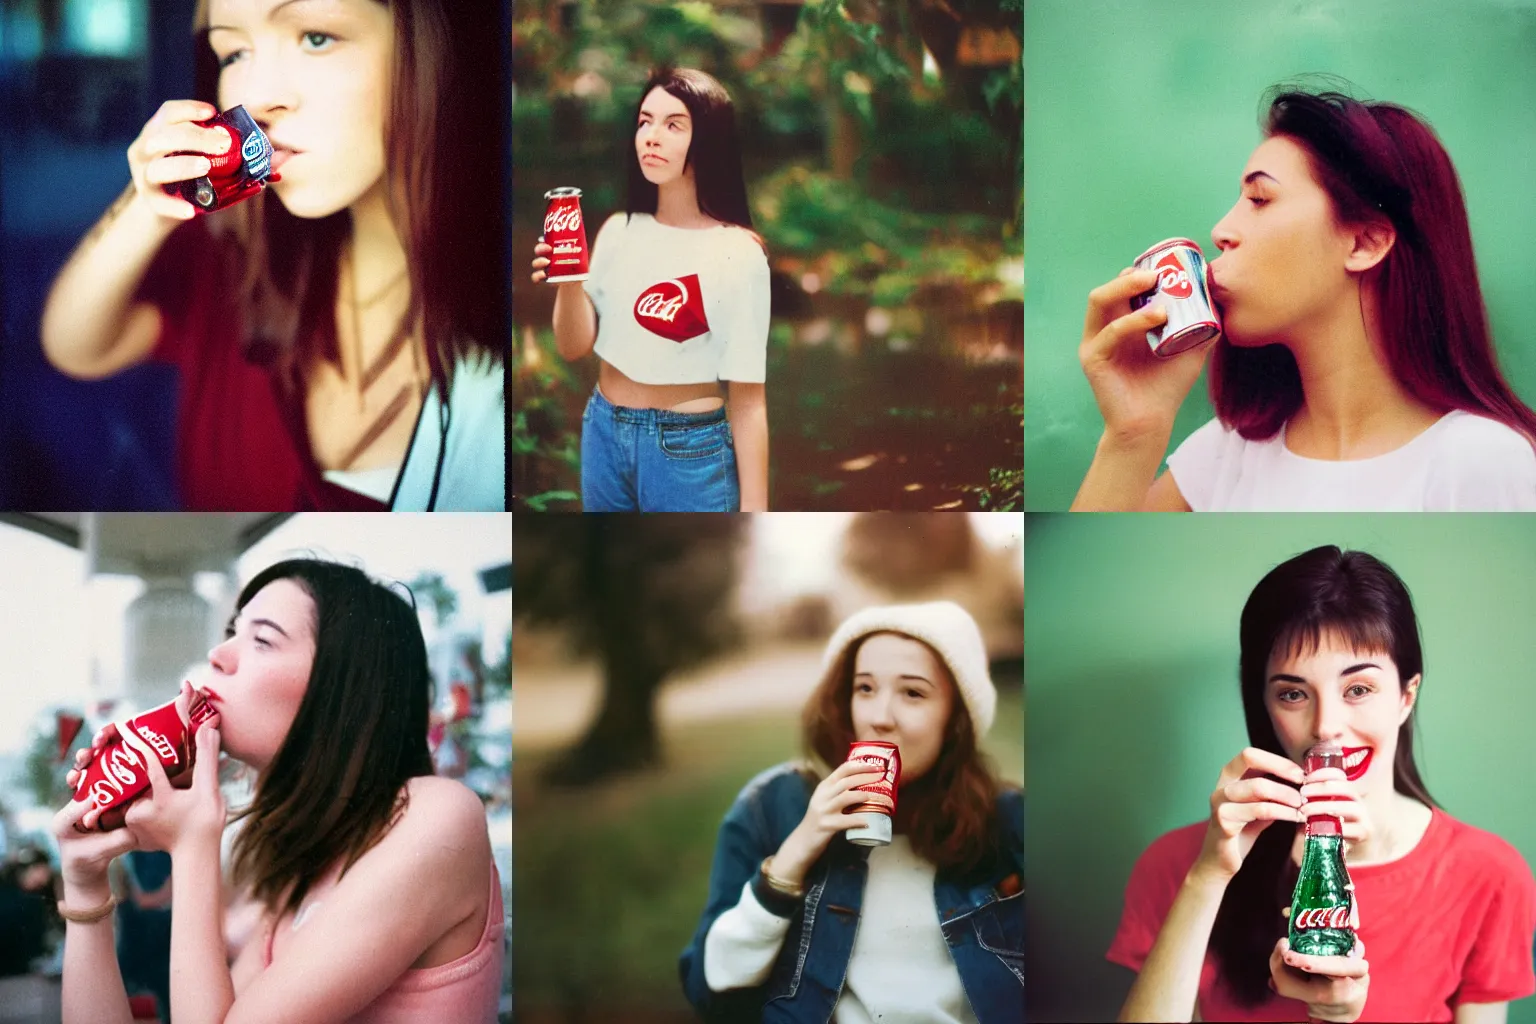 Prompt: an analog photo a 23 year old woman flirtatiously drinking a coca-cola, kodak portra 400